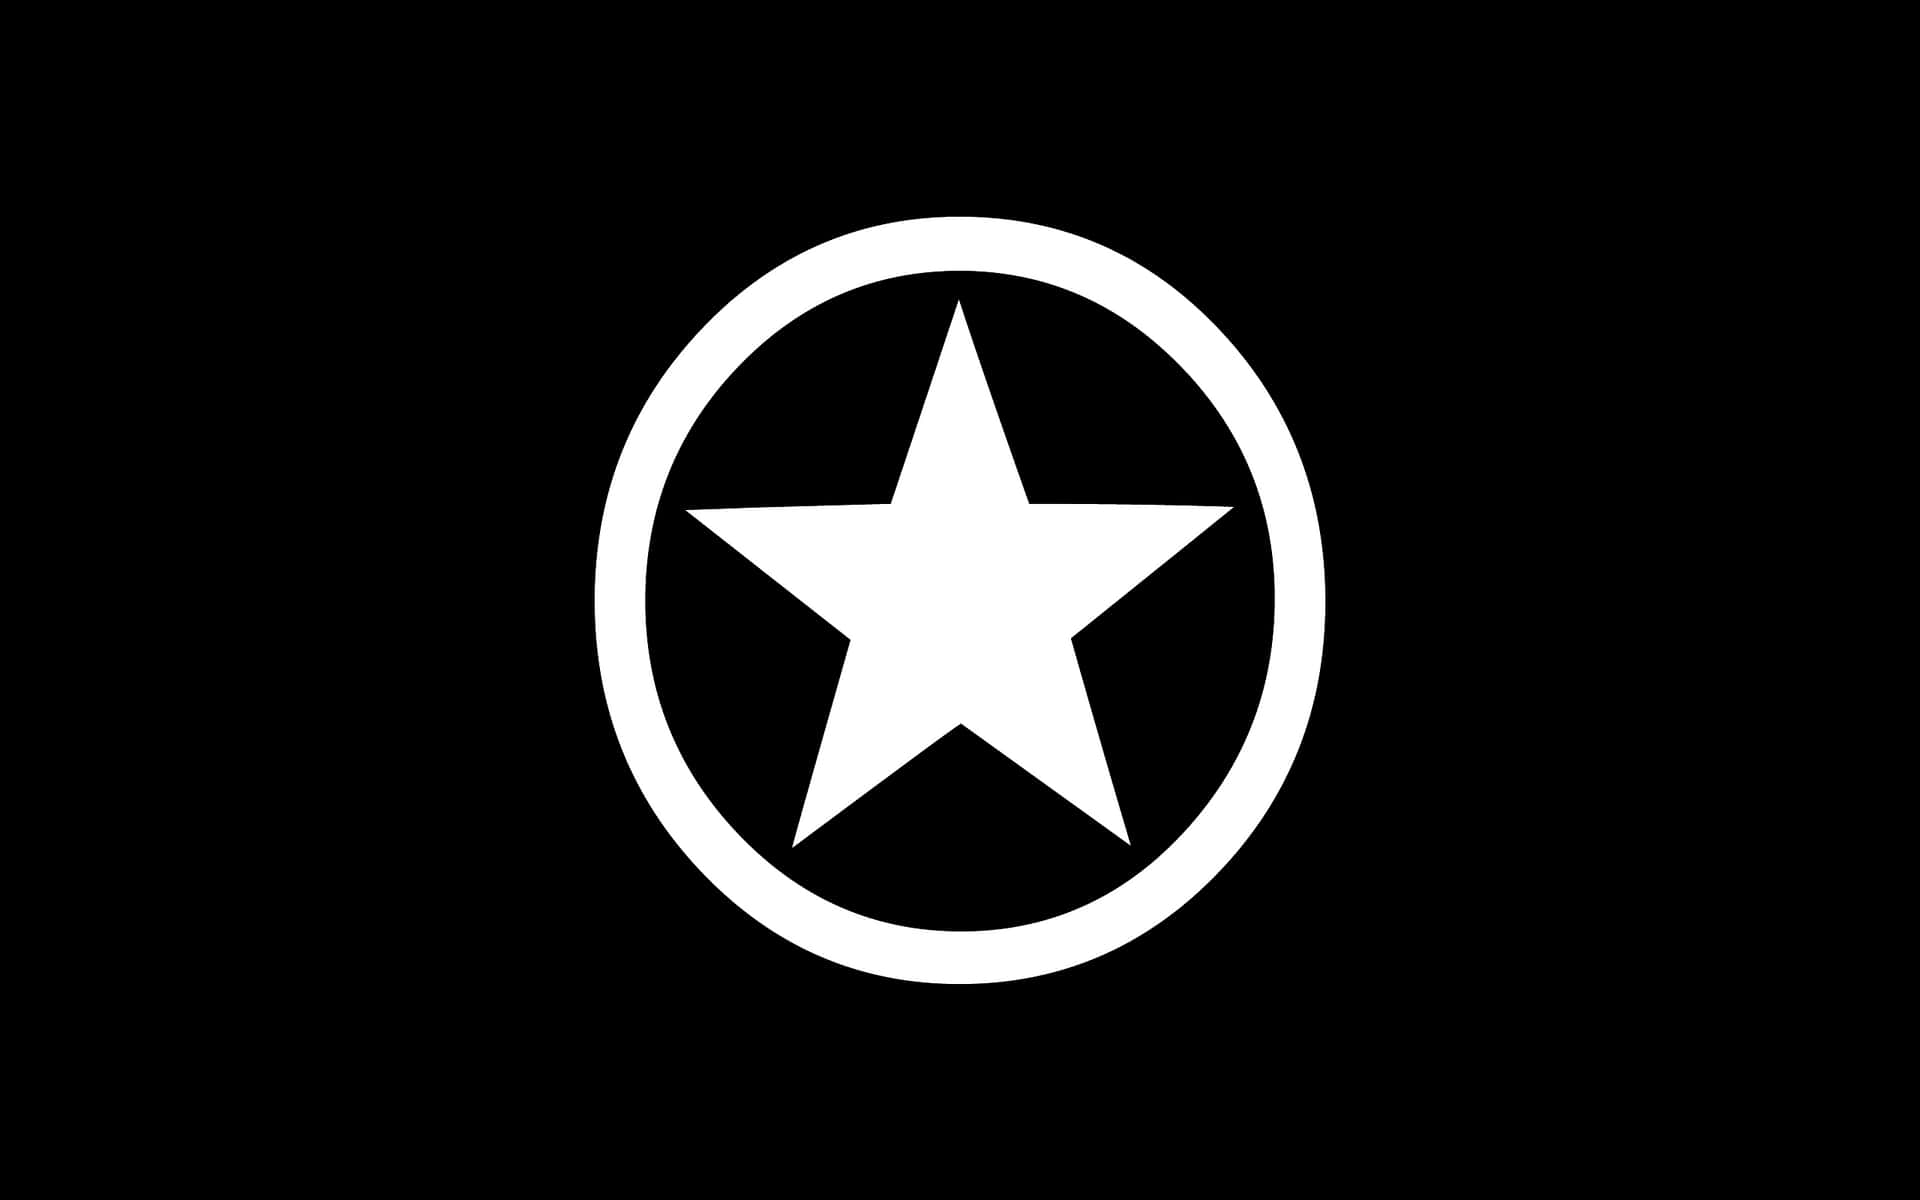 A White Star In A Black Circle